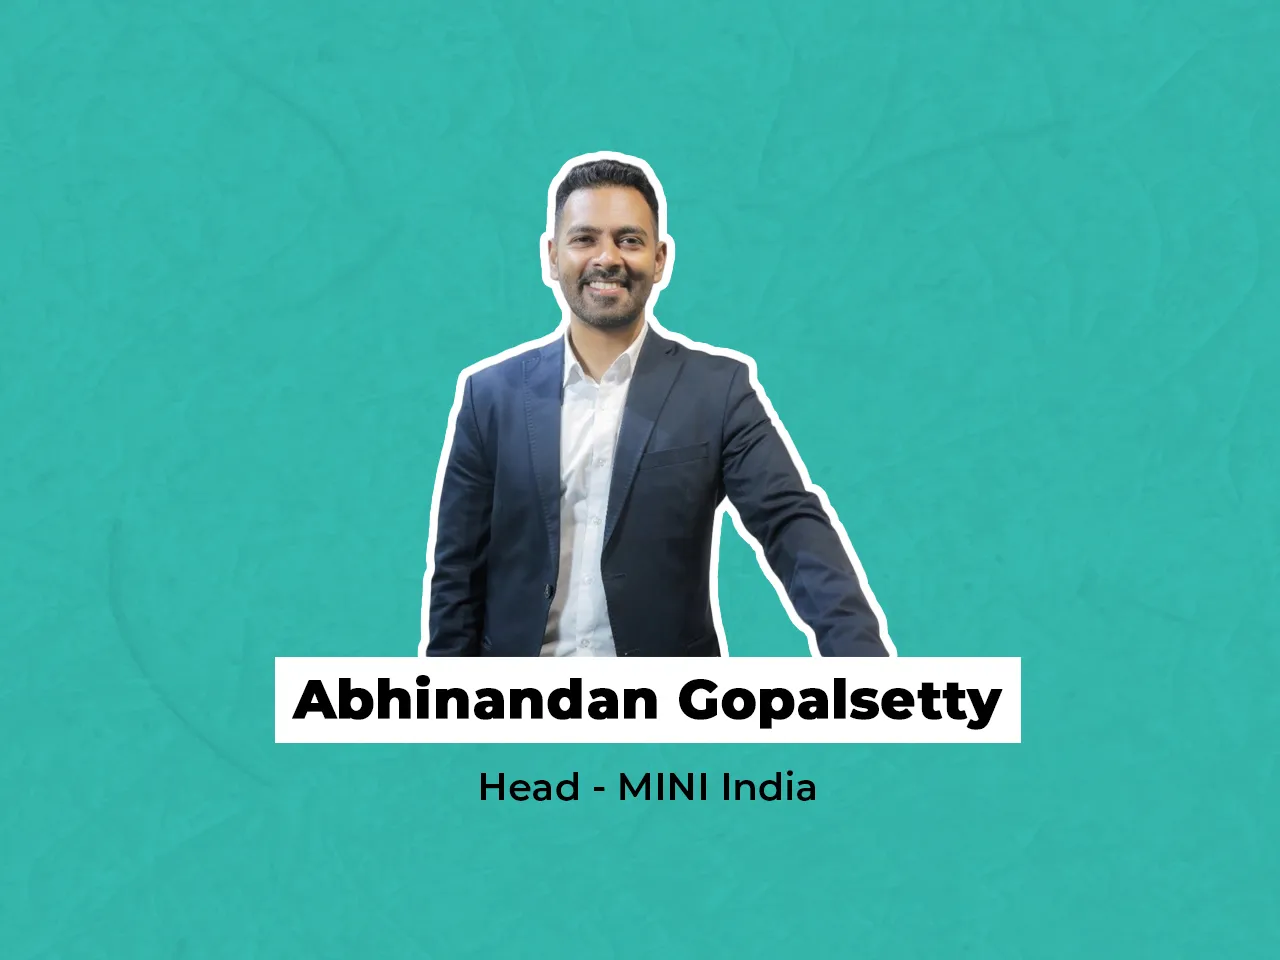 Abhinandan Gopalsetty